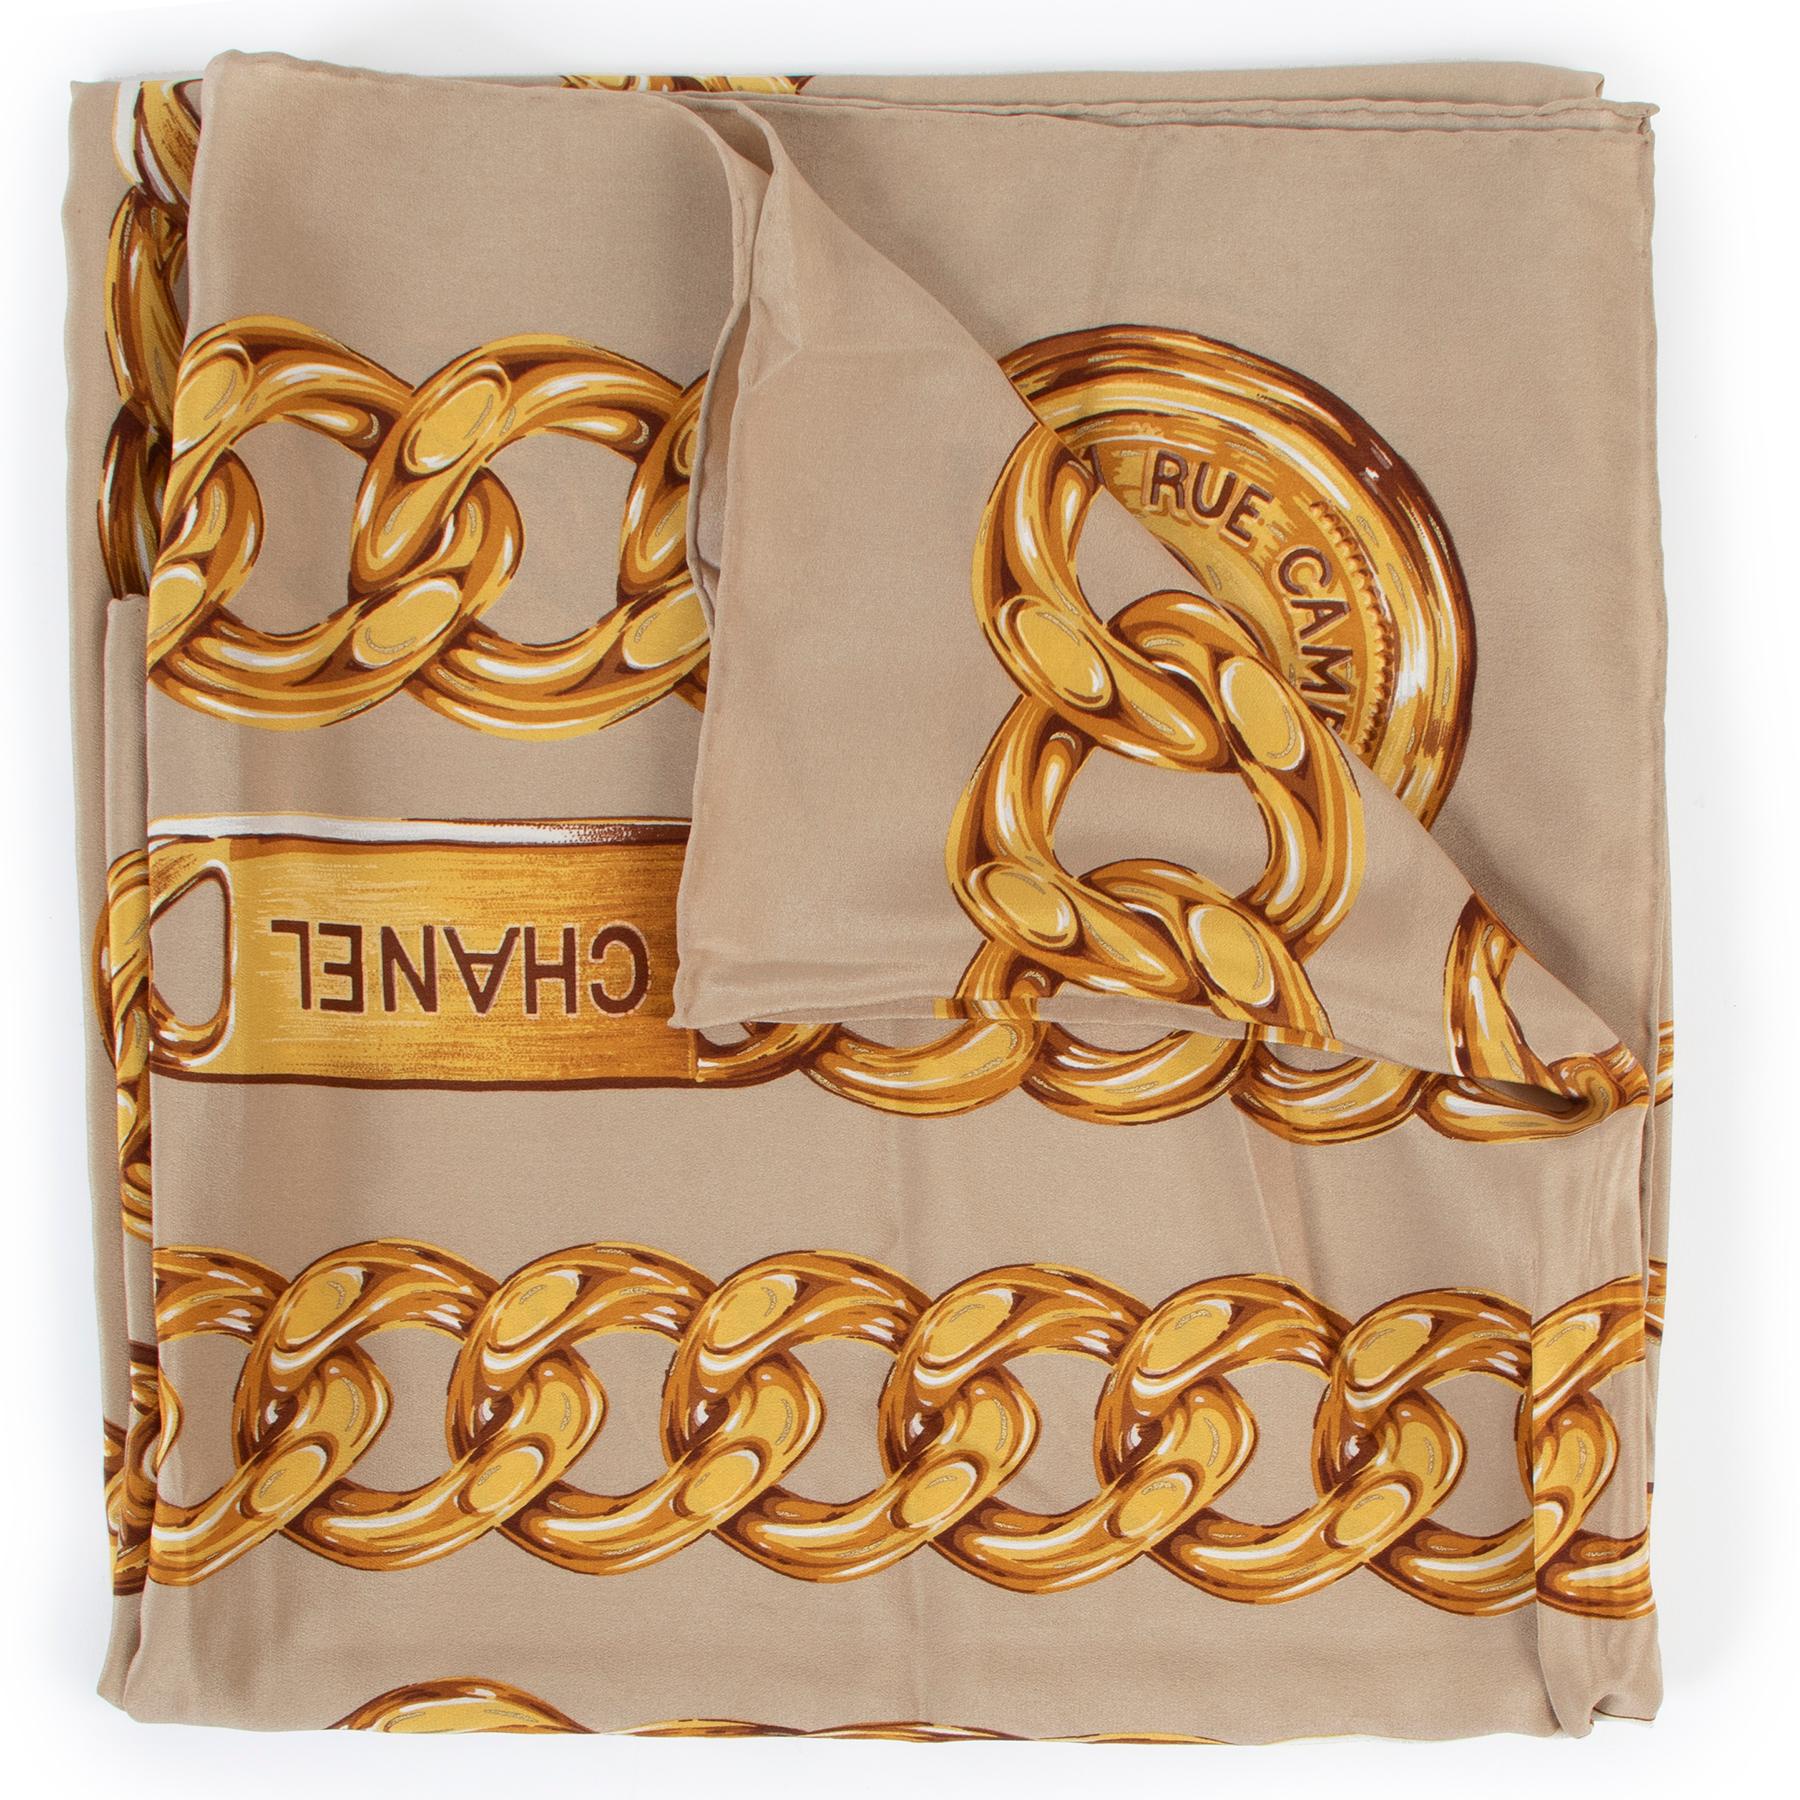 Chanel Vintage Gold Chain Medaillon XL Silk Scarf